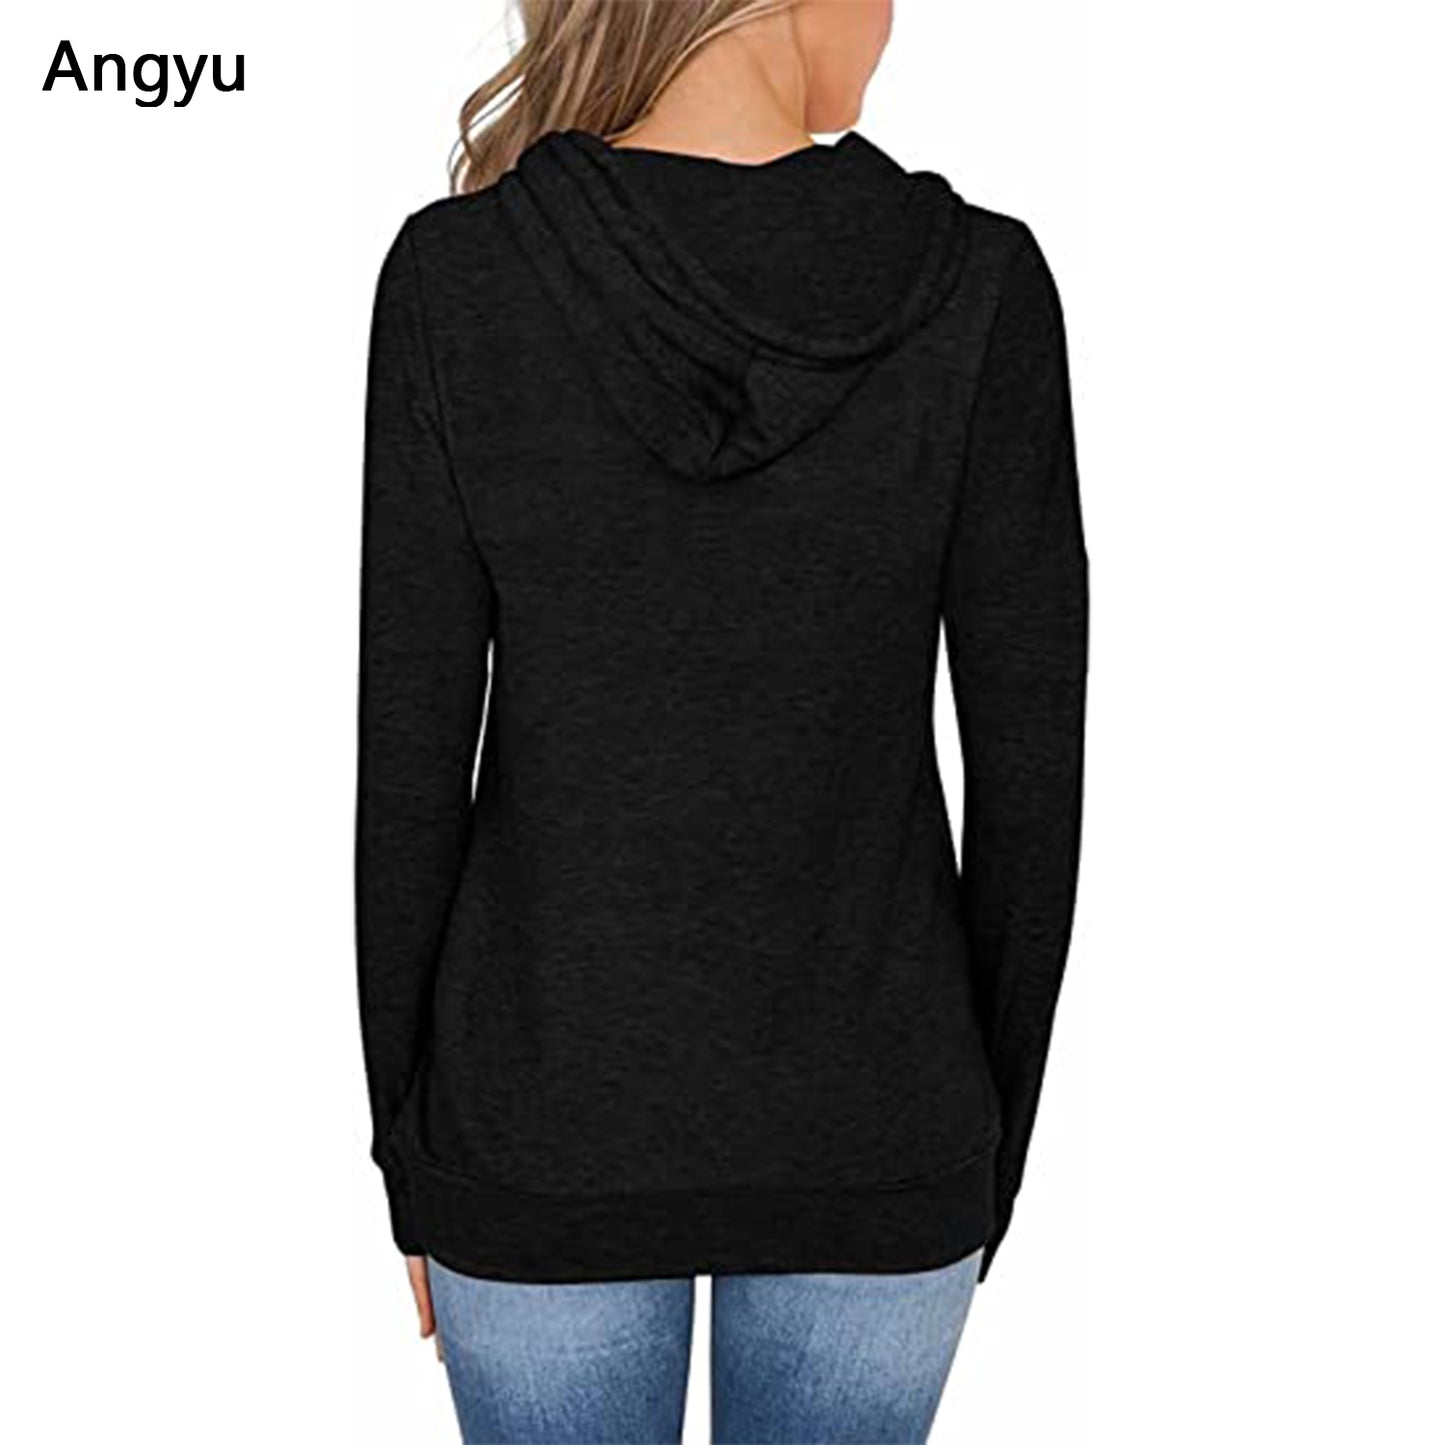 Angyu Women Hoodies Tops Long Sleeve Drawstring Pullover Sweatshirts with Pocket